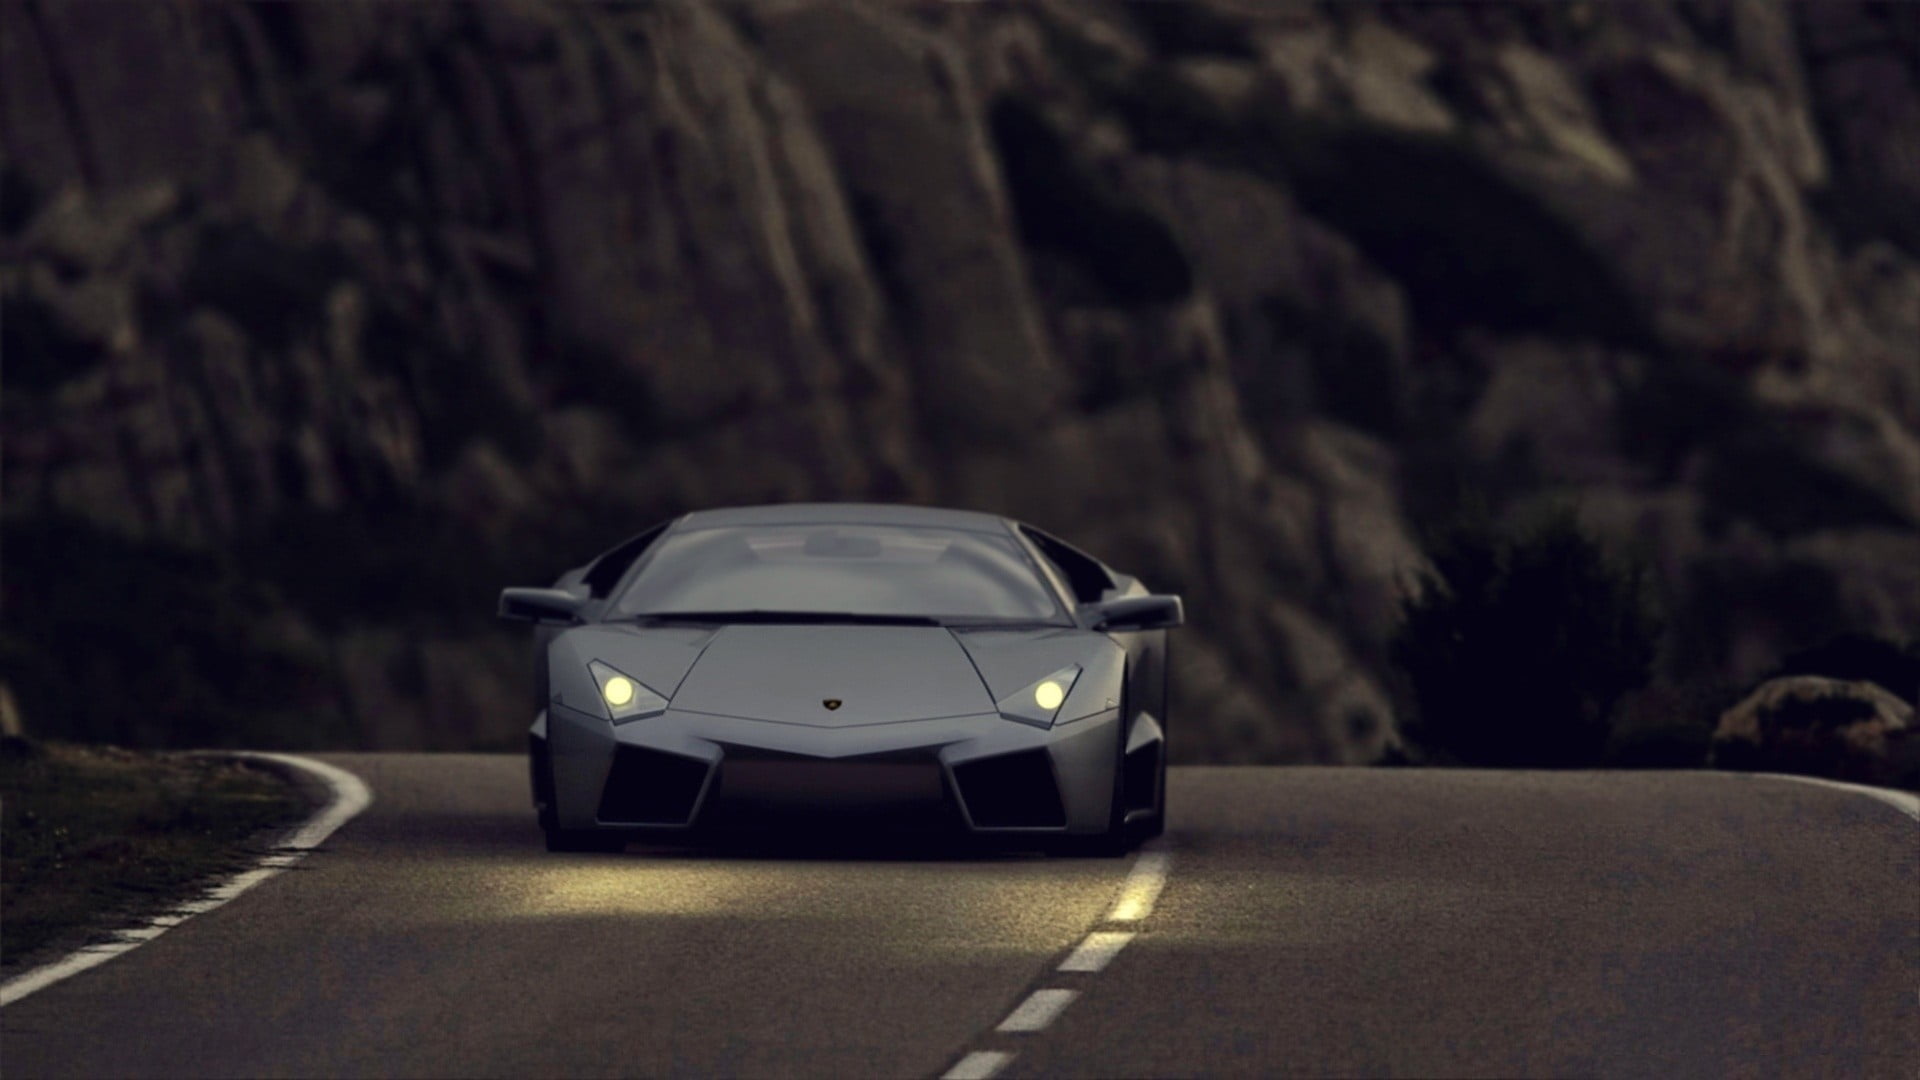 gray Lamborghini Aventador, gray sports car on asphalt road outdoors